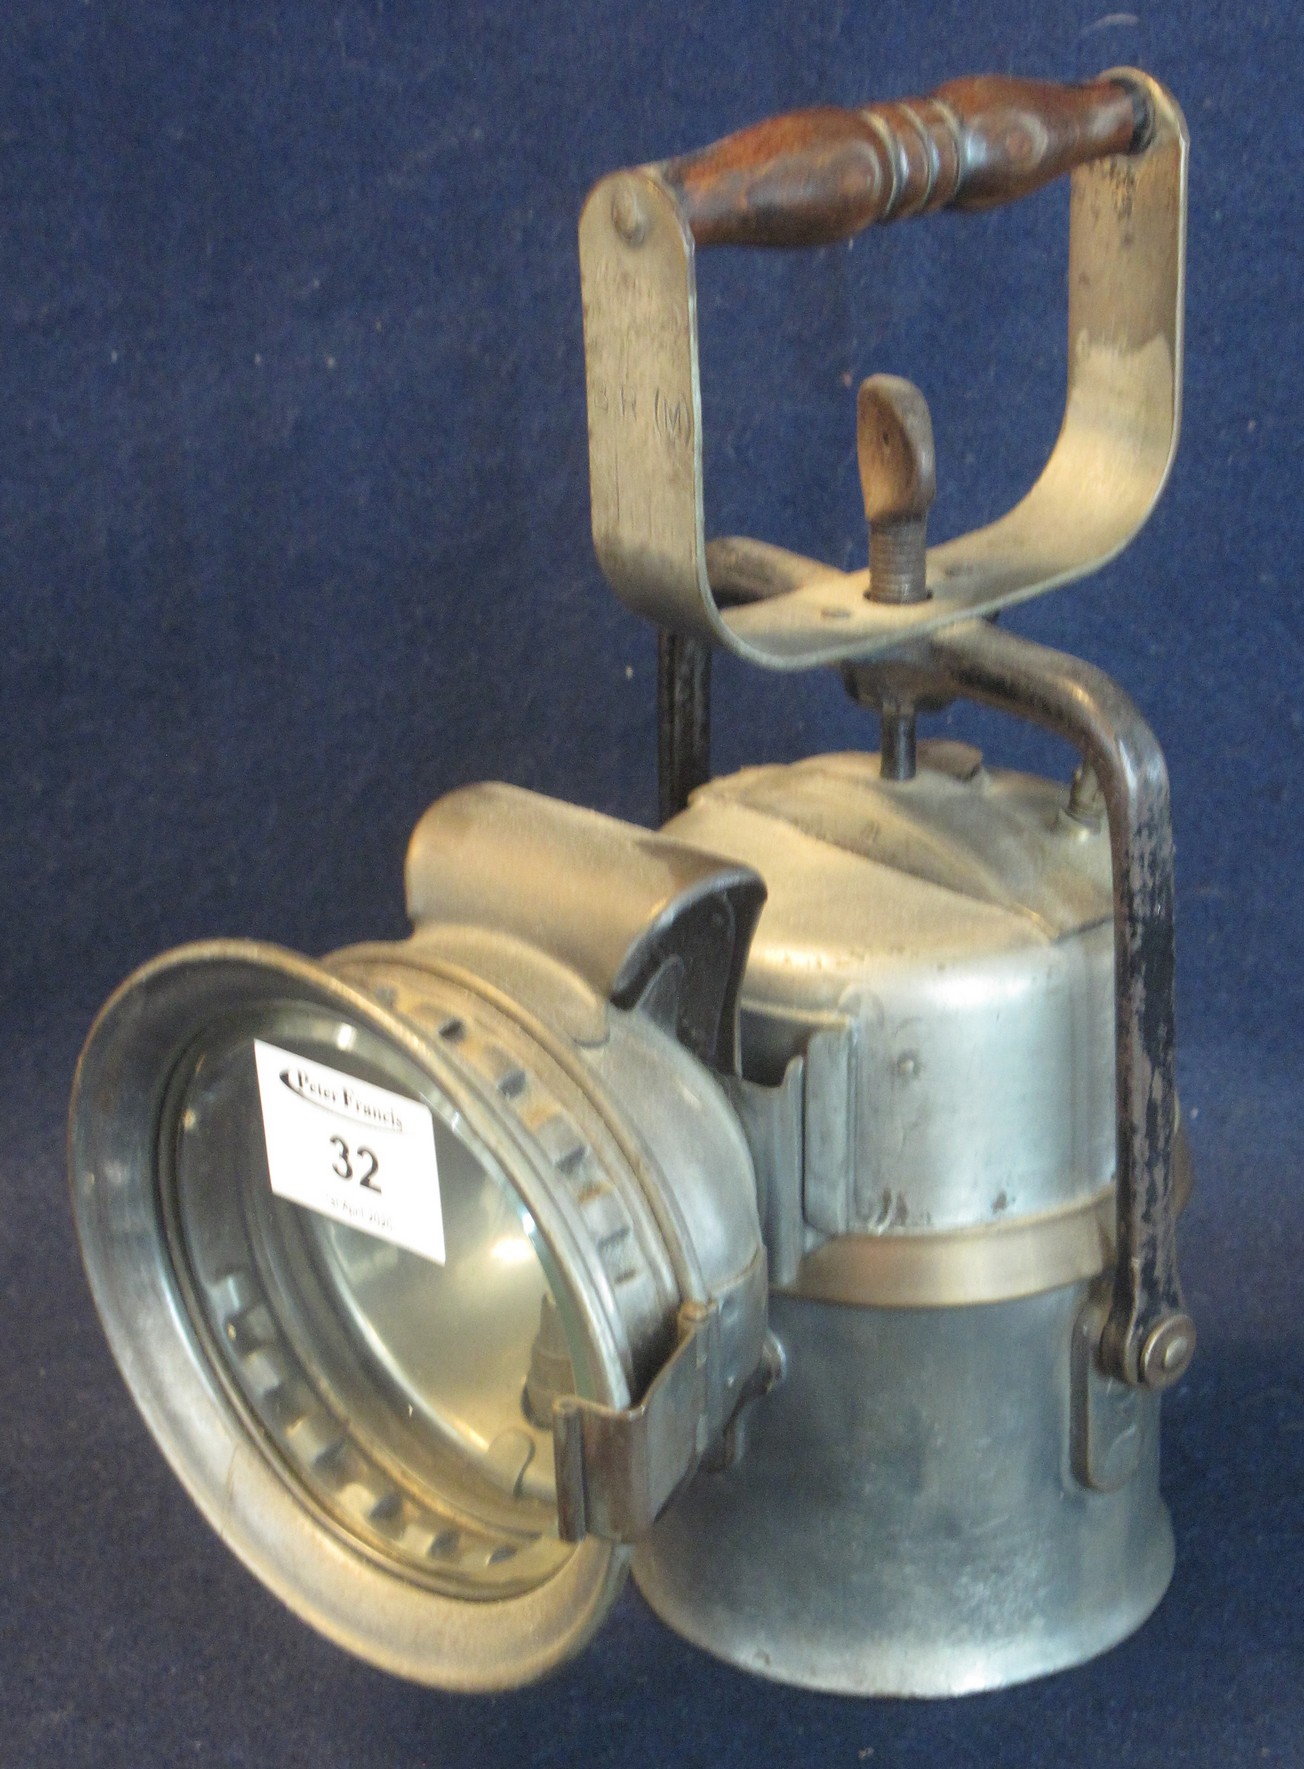 A British Railways Midland Region Crestella Engineering Company Ltd 'The Premier Lamp, Railwayman'